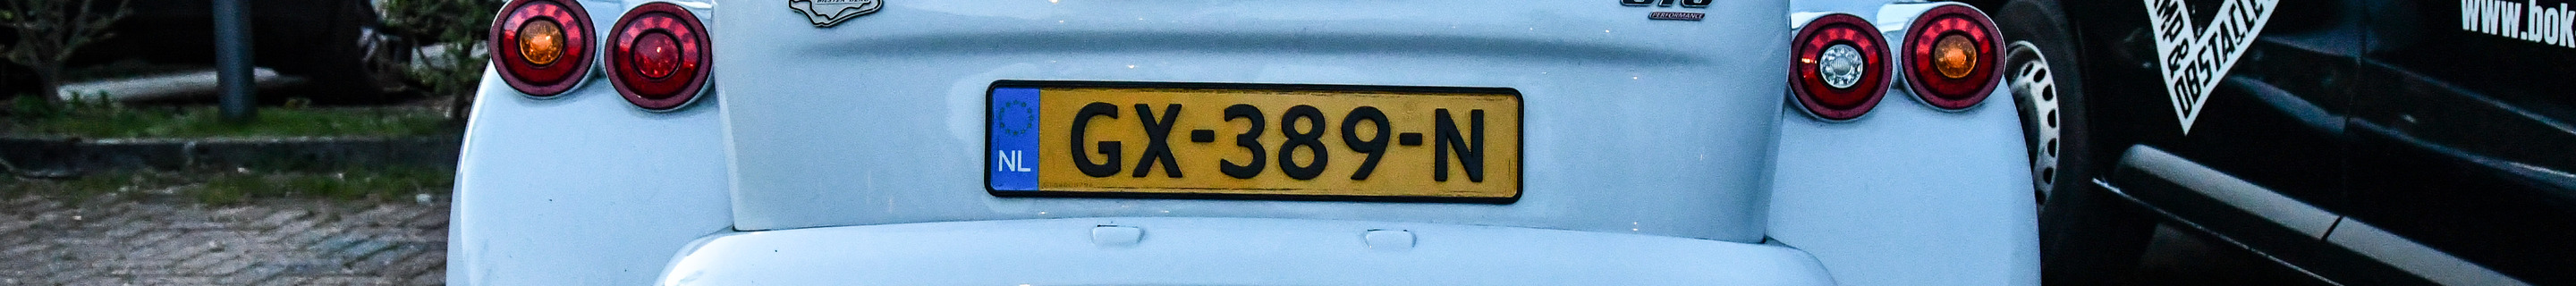 Donkervoort D8 GTO Bilster Berg Edition